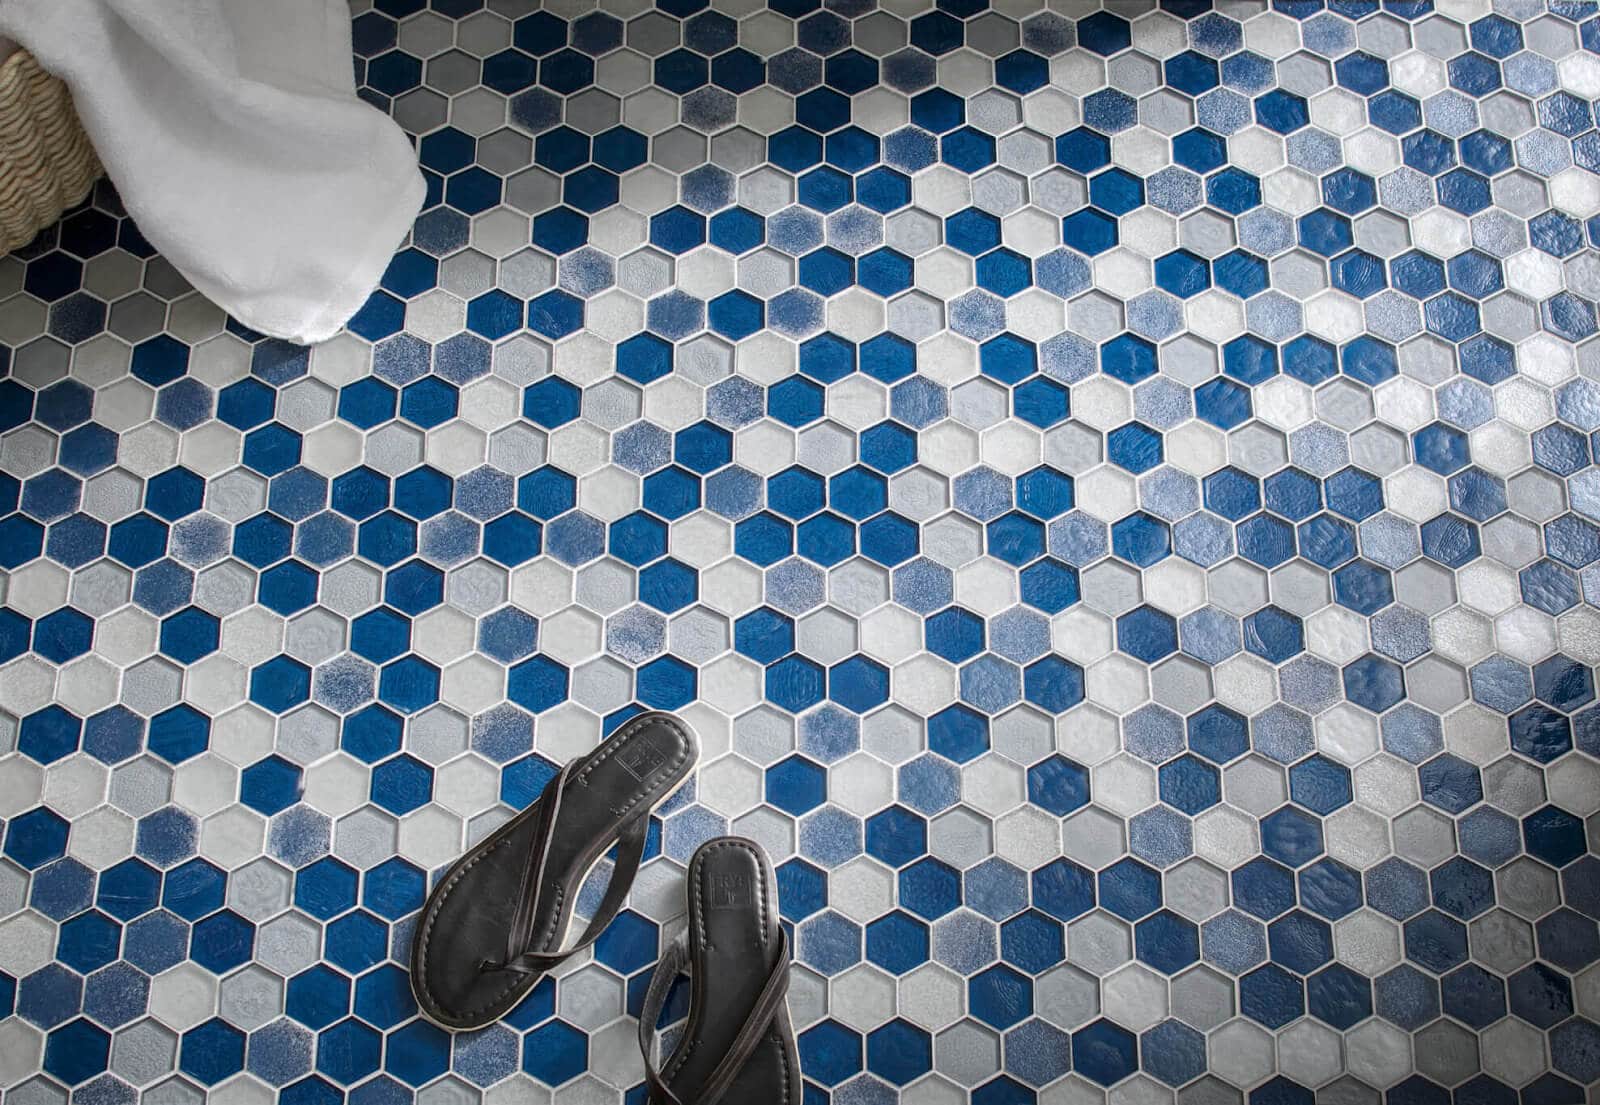 Blue and white hexagon tile mosaic floor